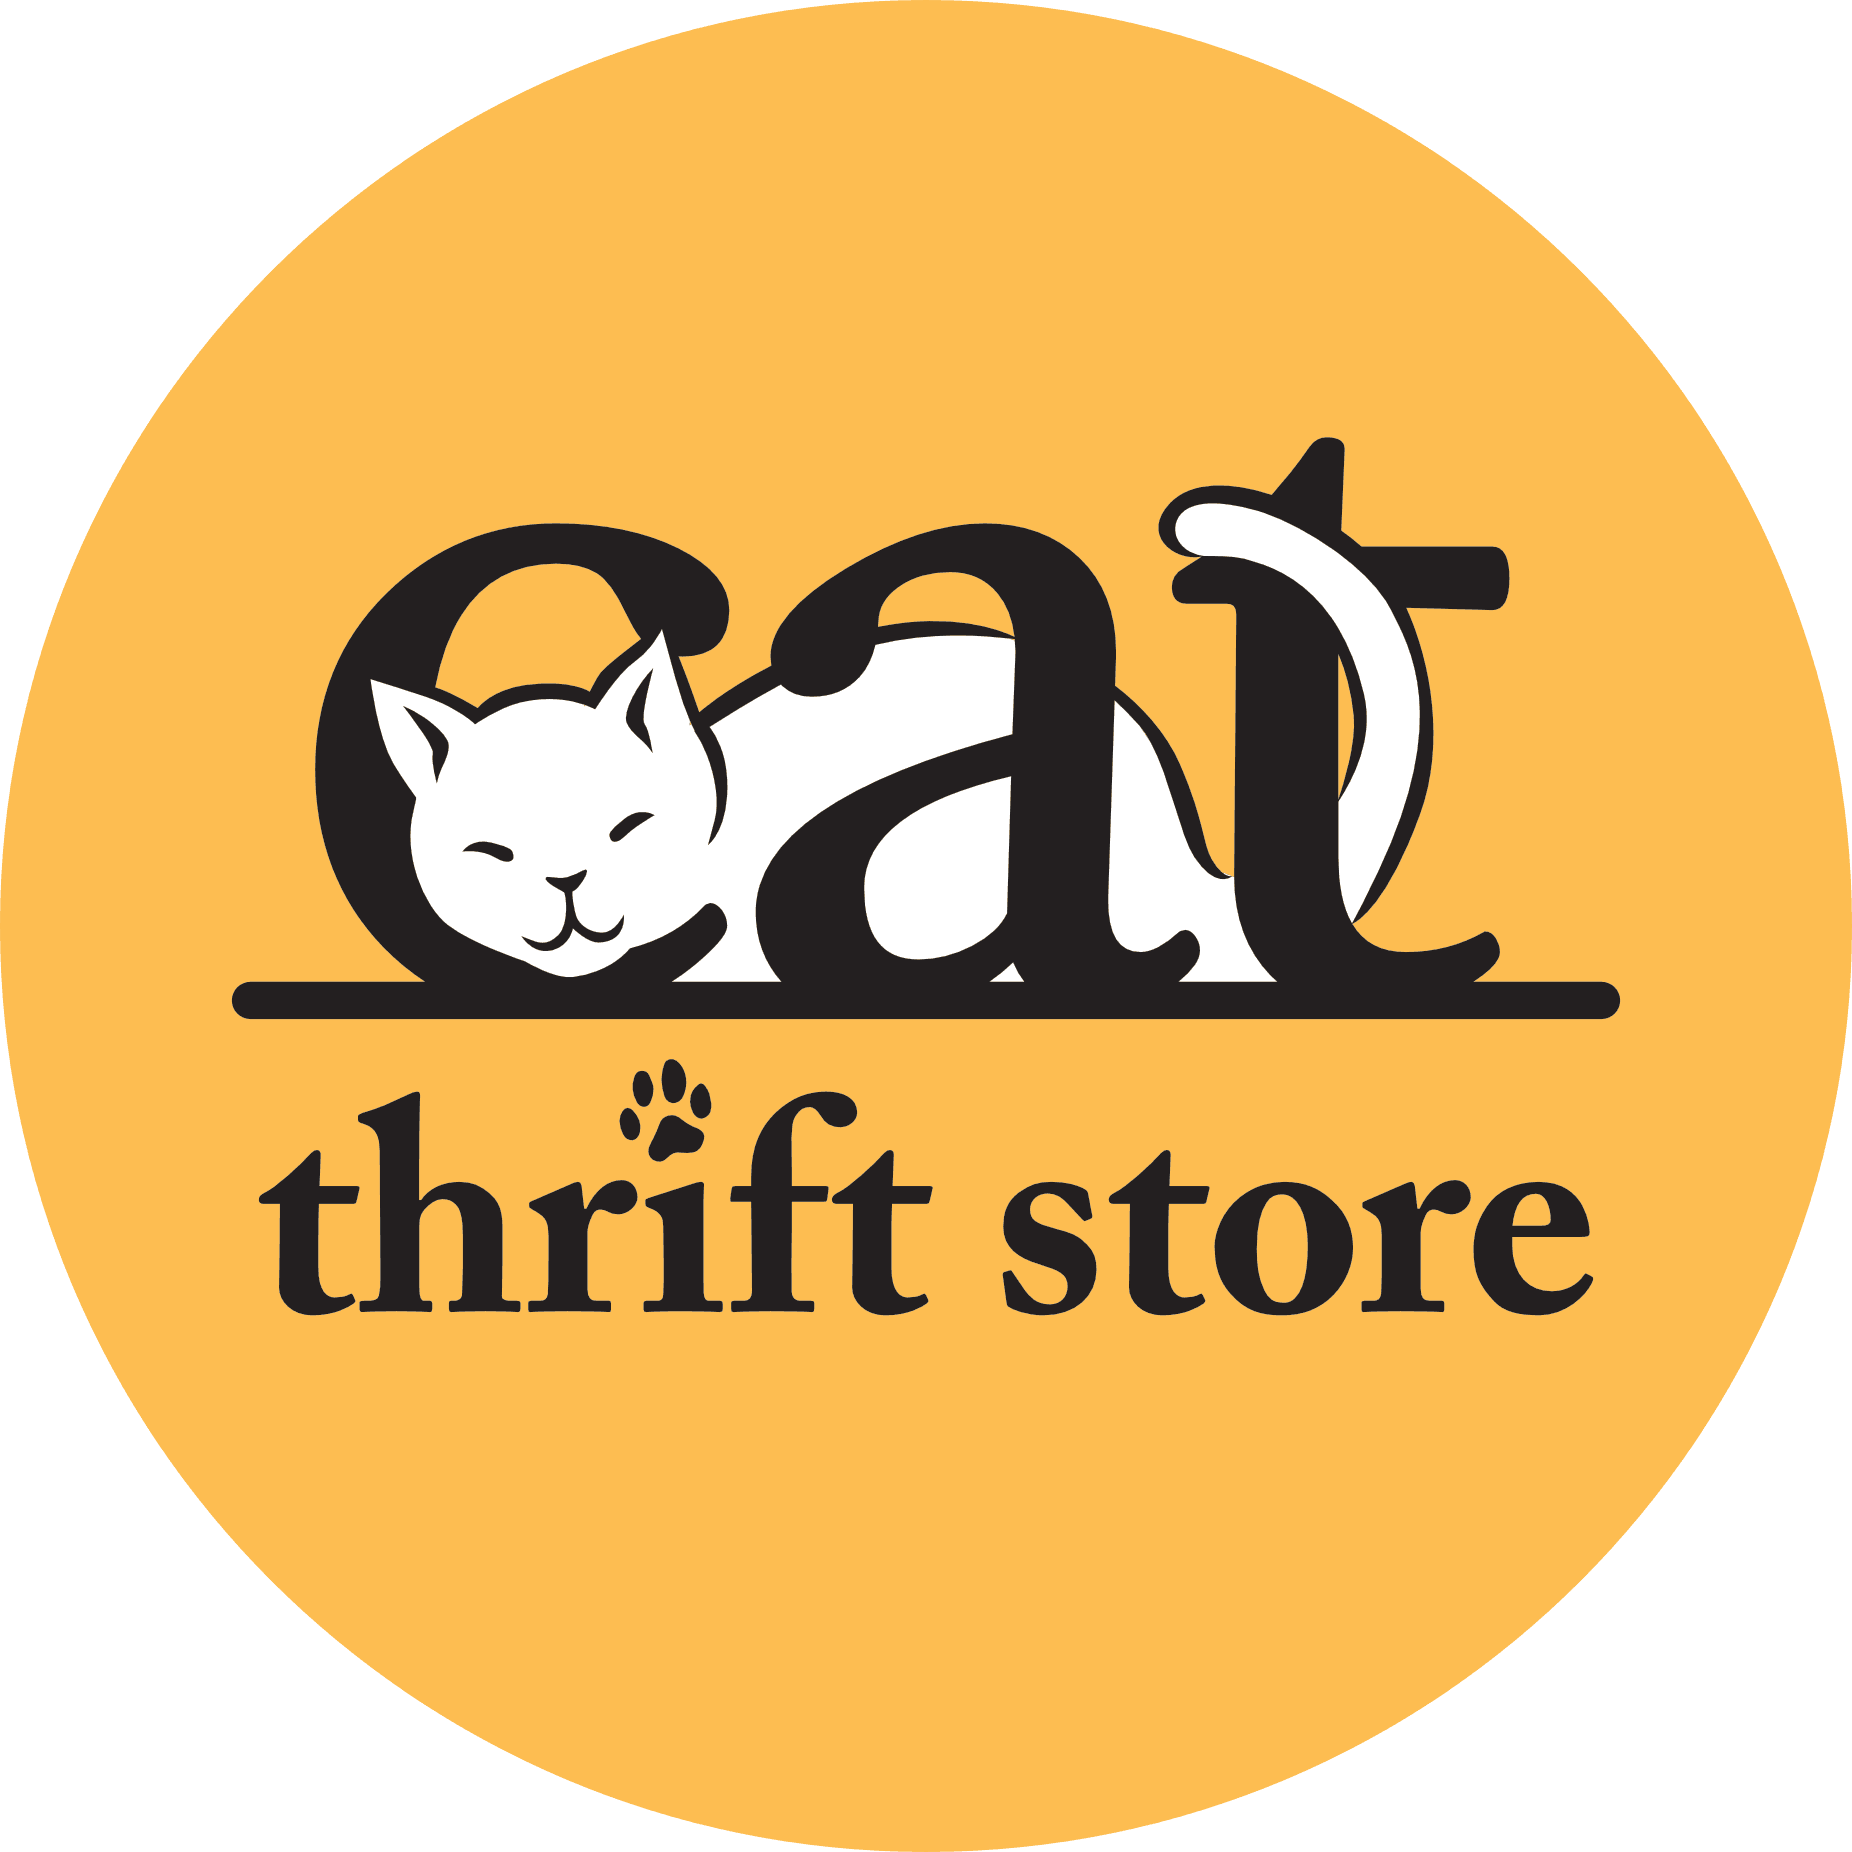 thrift store logo ideas 3